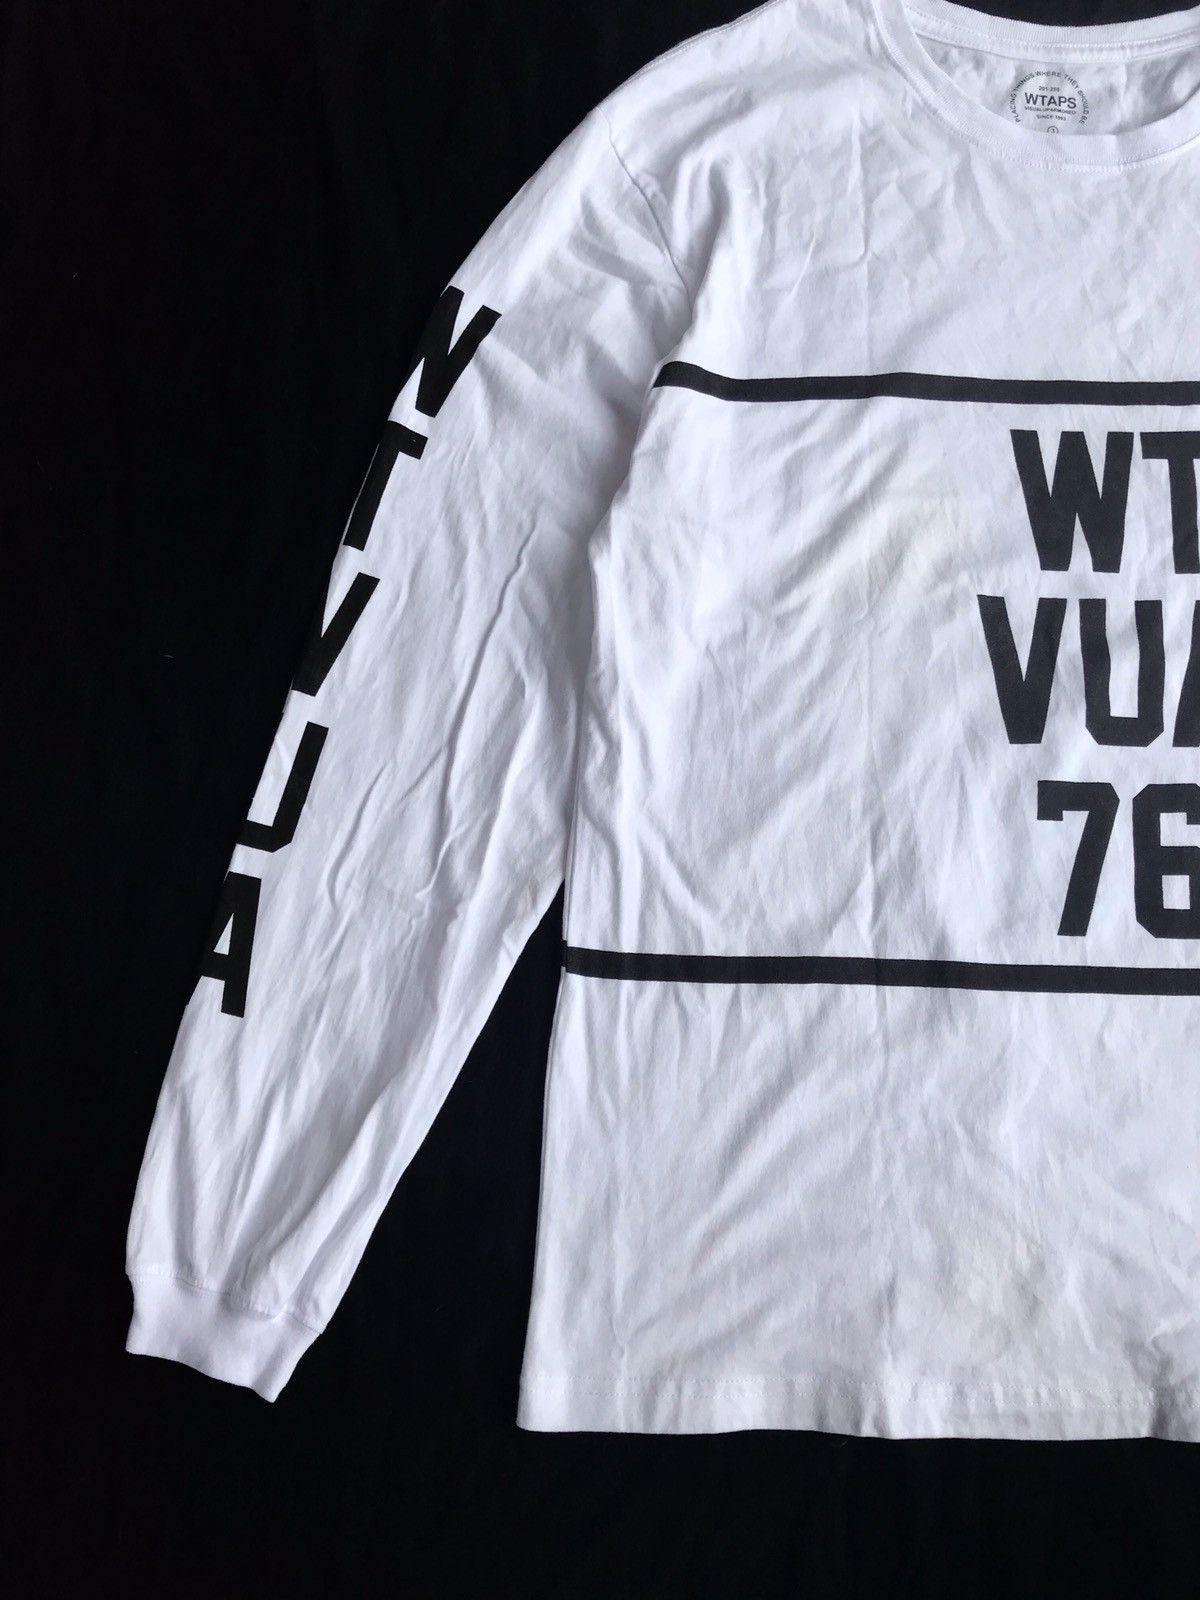 Wtaps WTVUA76 Long Sleeve Tshirt Made in Japan - 4